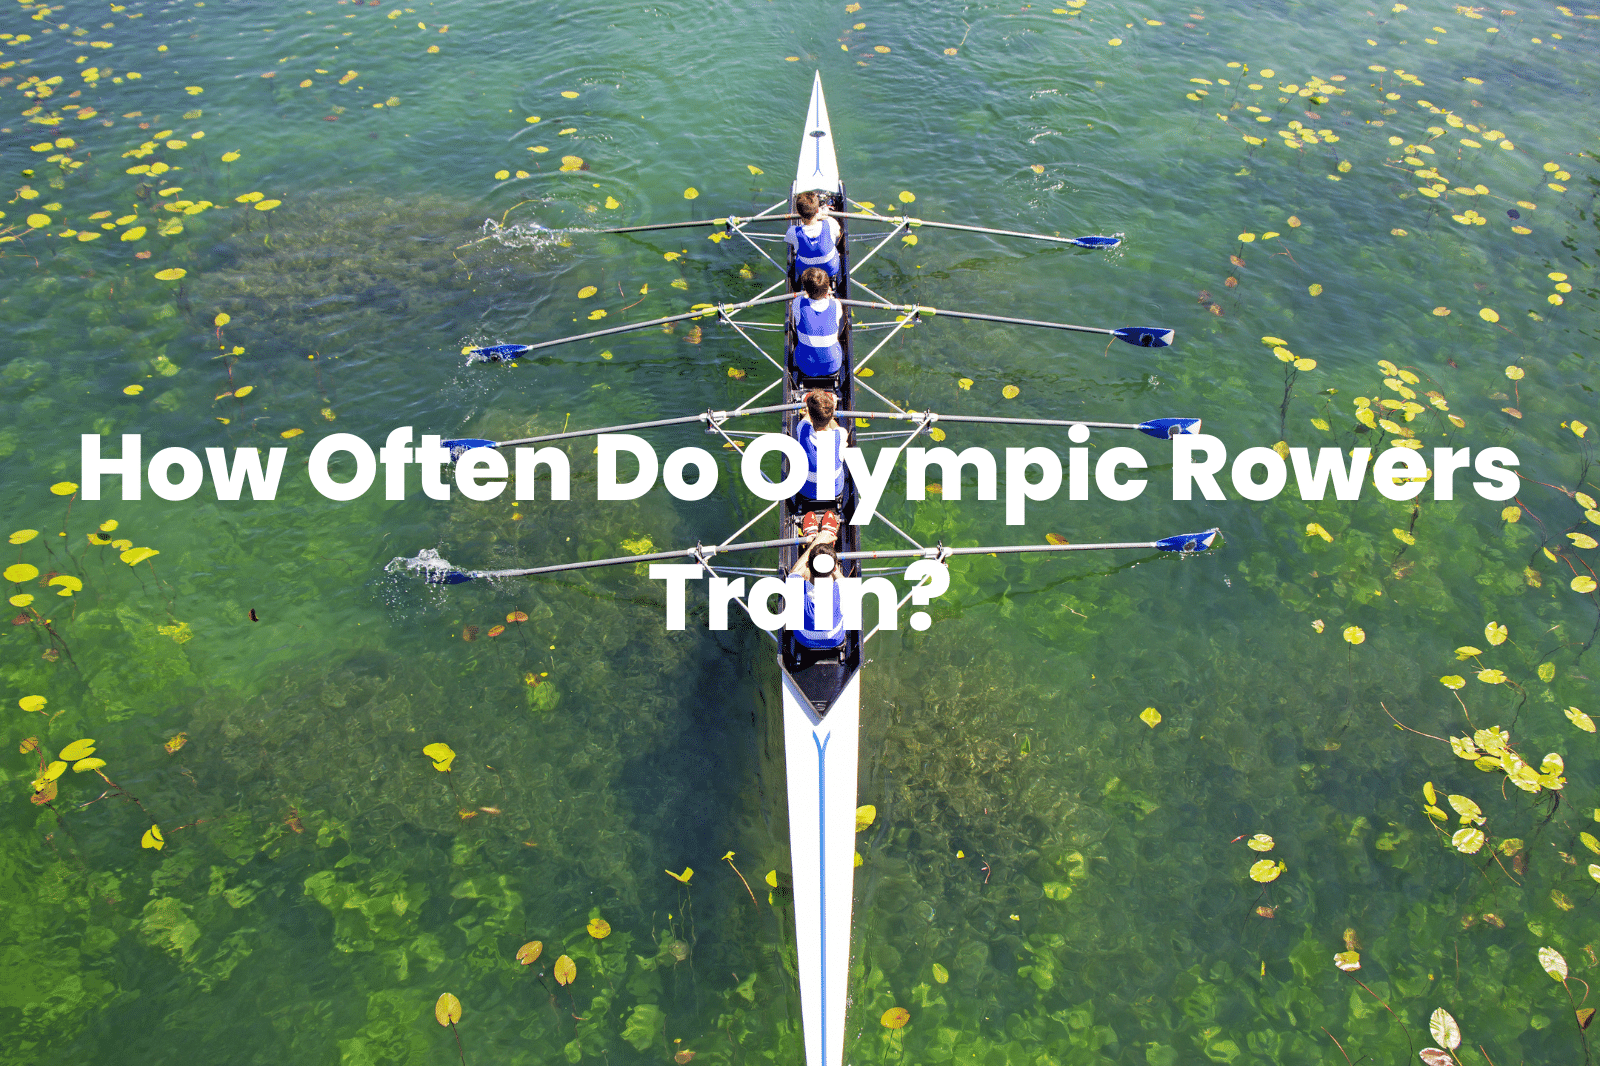 Olympic rowers train